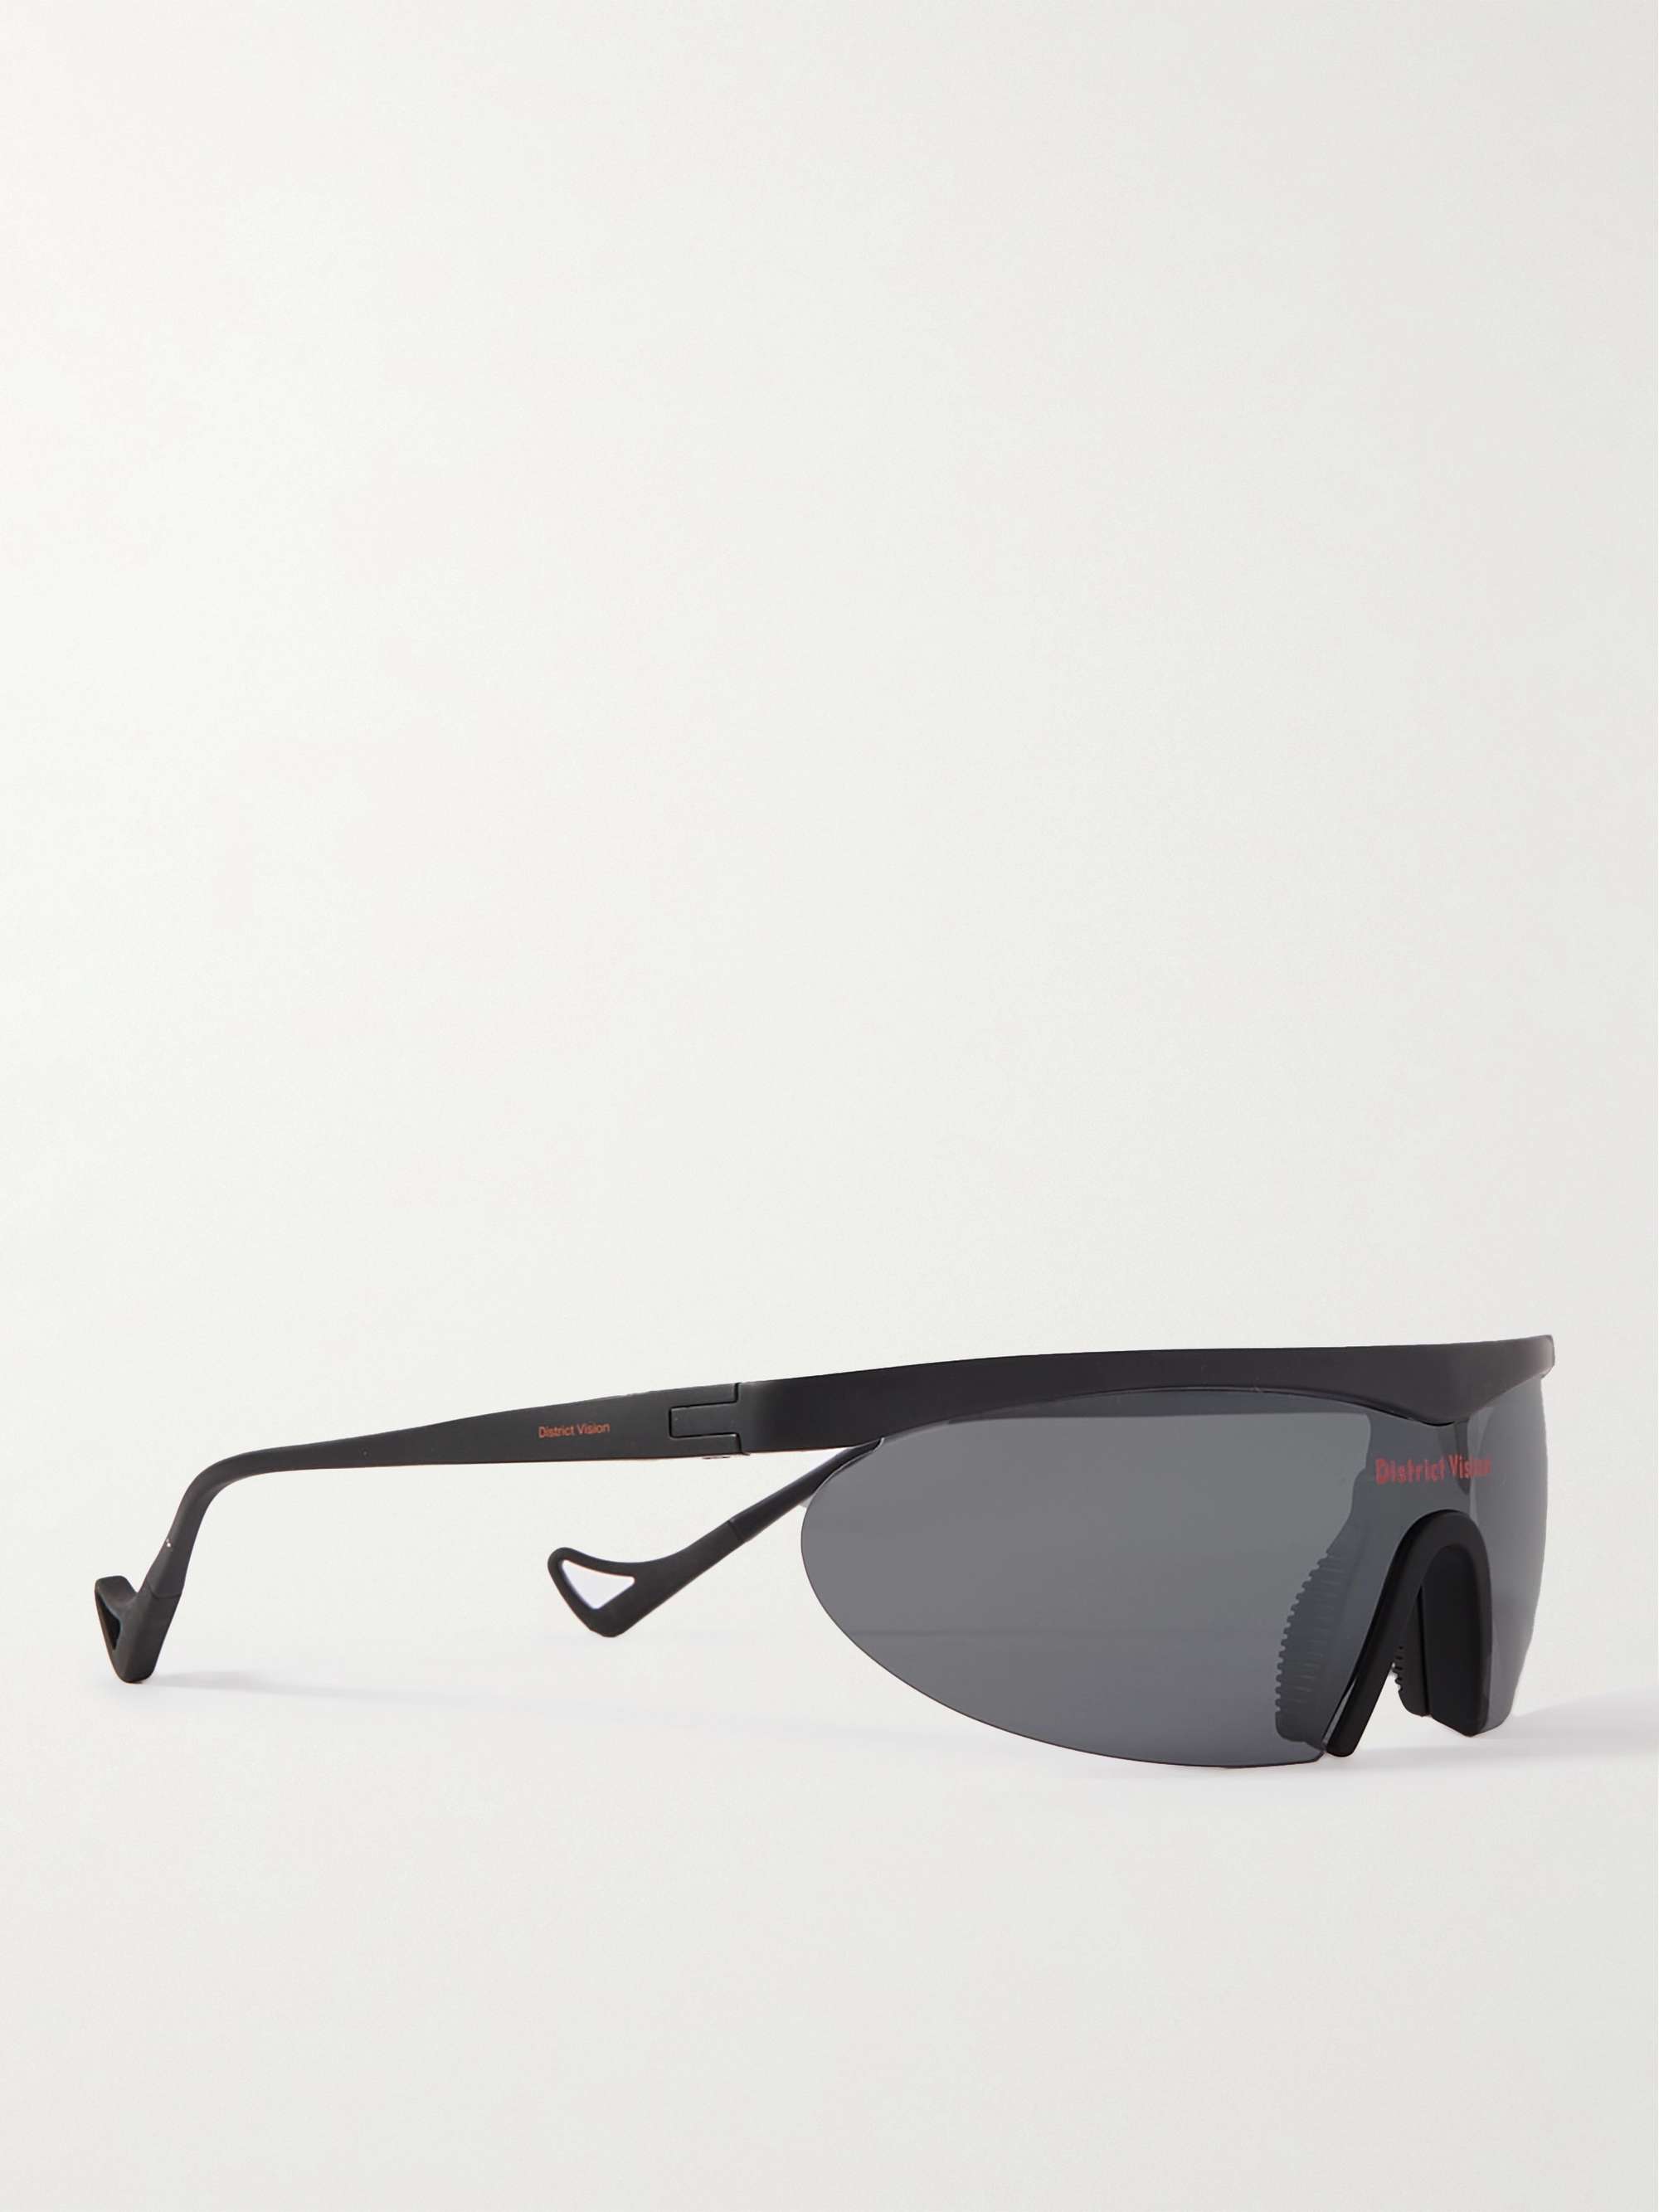 DISTRICT VISION Koharu Eclipse D-Frame Polycarbonate Sunglasses